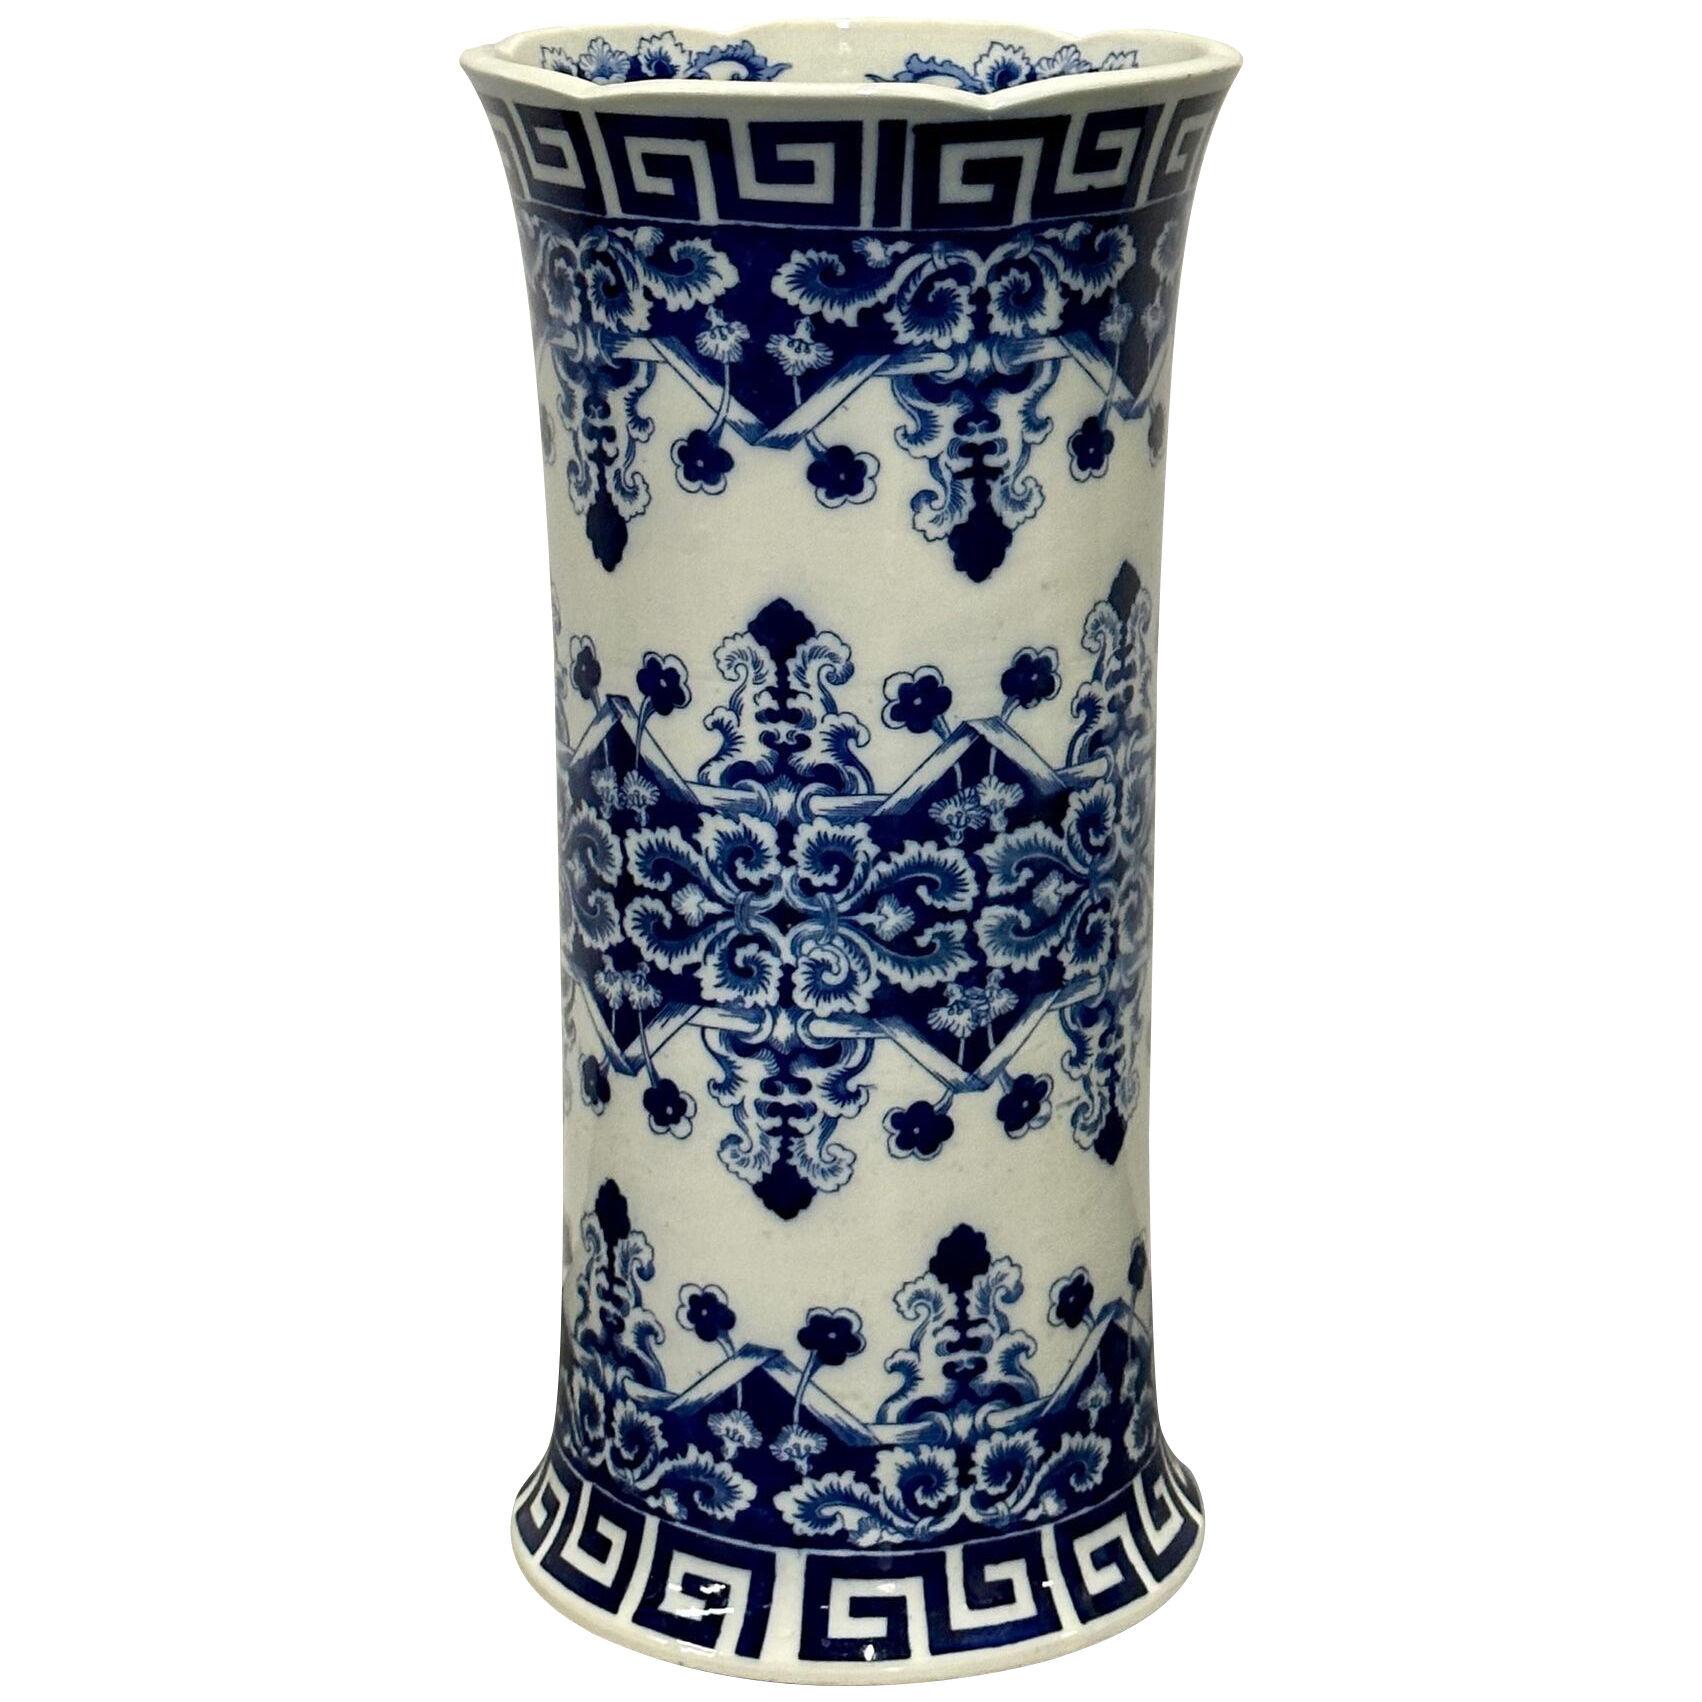 Oriental Porcelain Flow Blue White Umbrella Stand, Large Vase, Floral Decorated